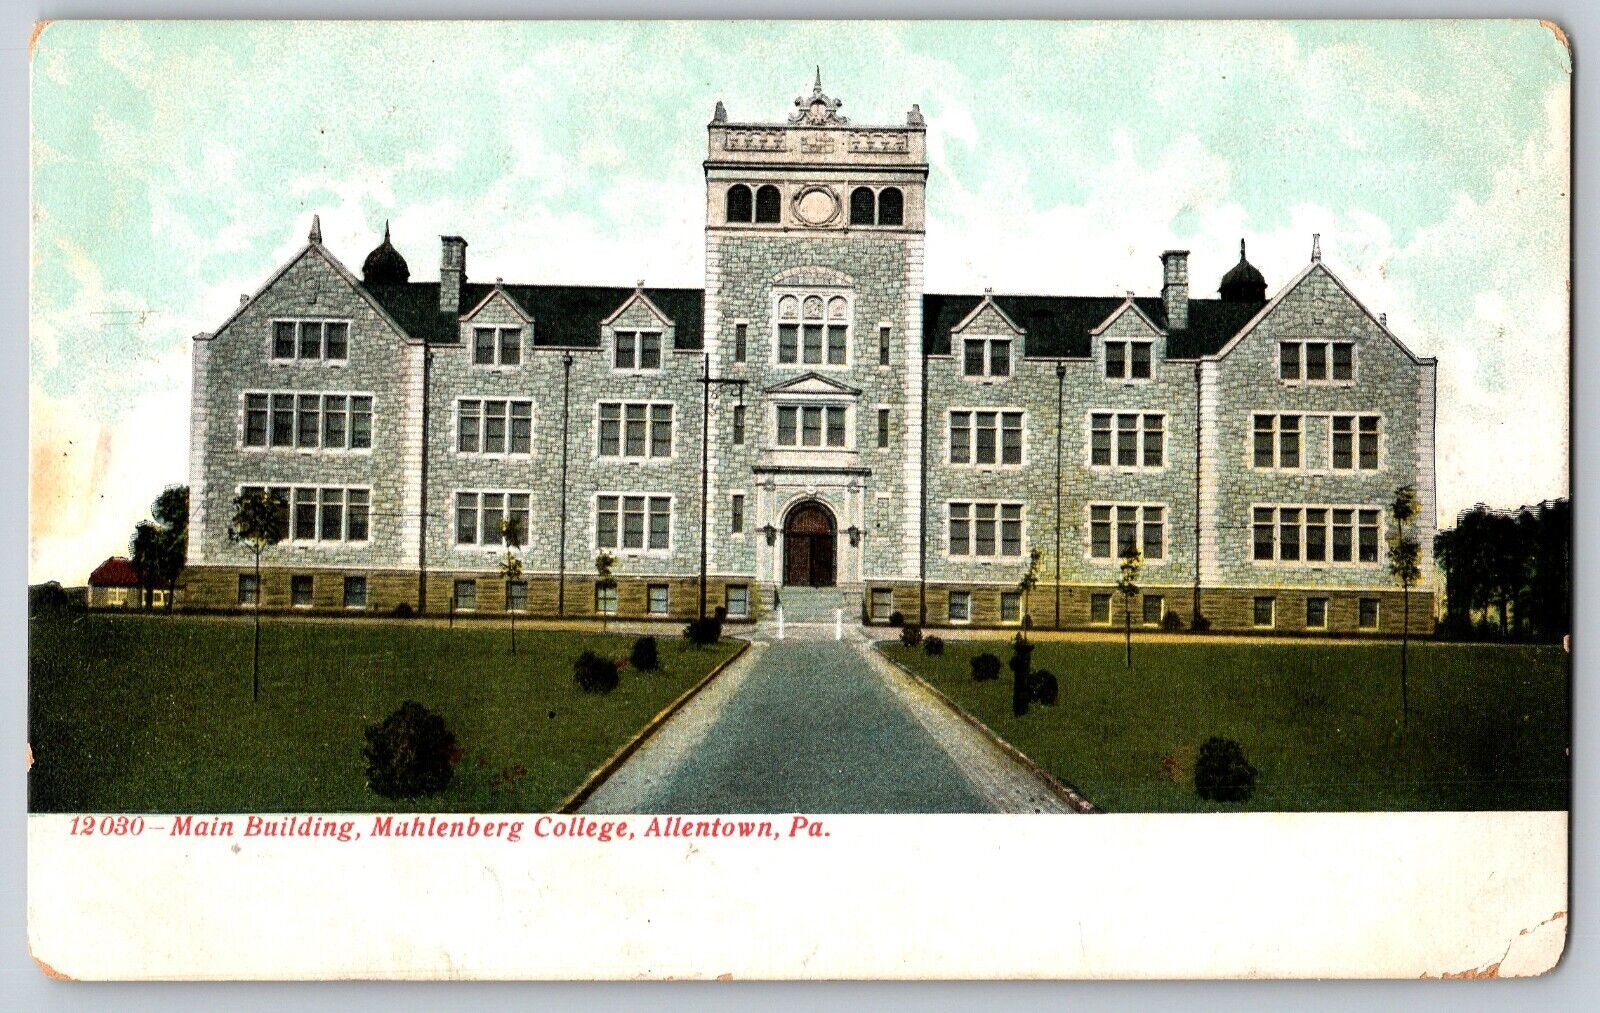 Allentown, PA - Main Building, Muhlenberg College - Vintage Postcard - Unposted